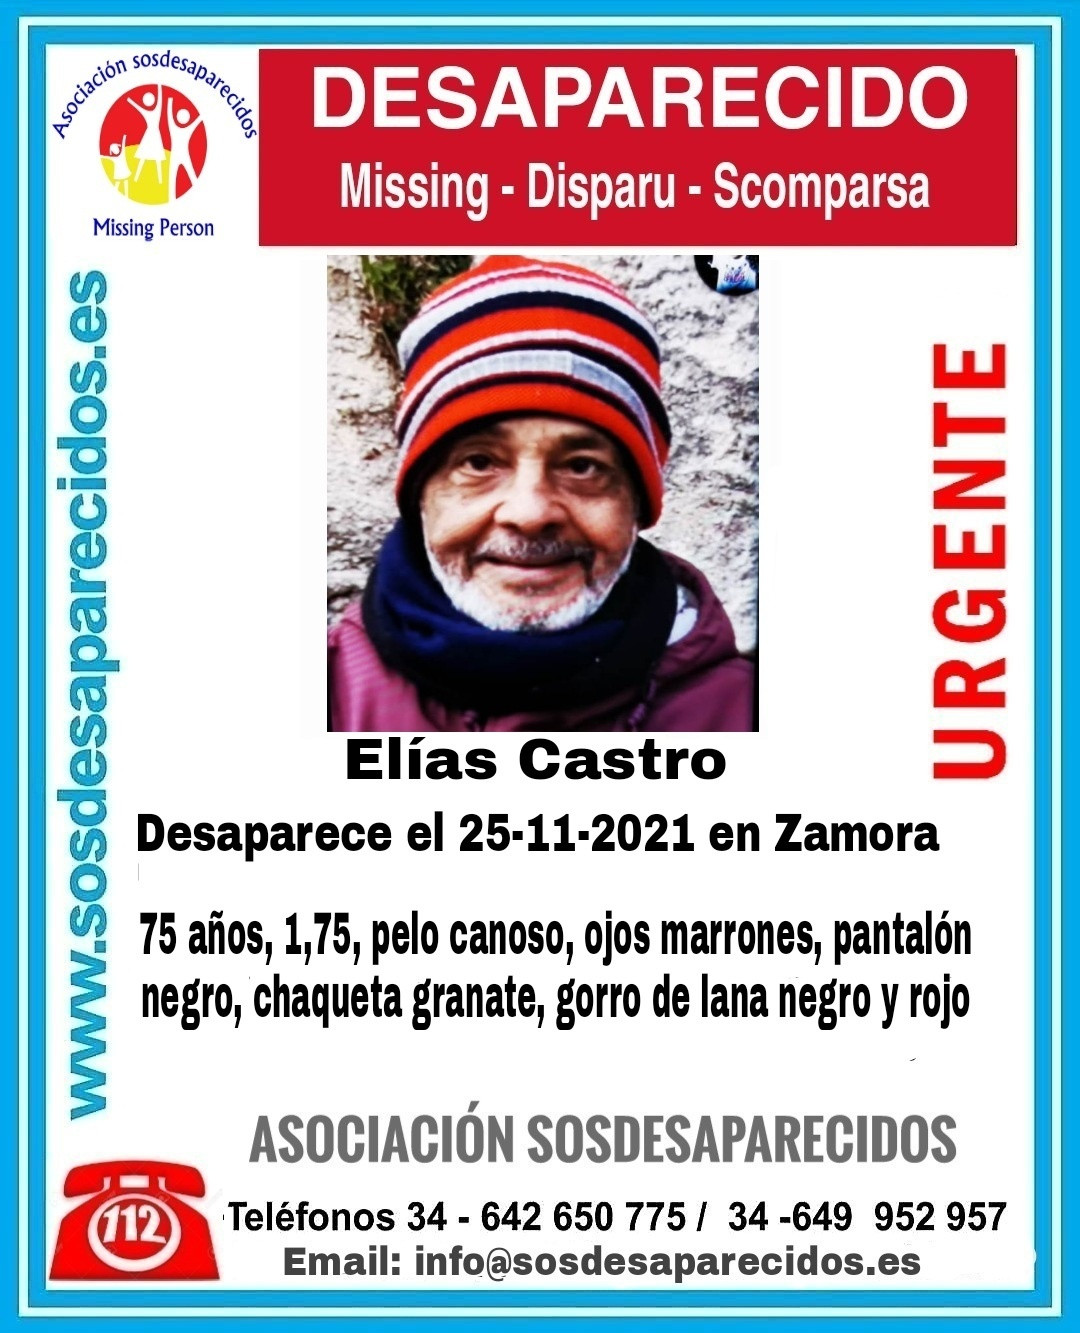 Elu00edas Castro, desaparecido en Zamora